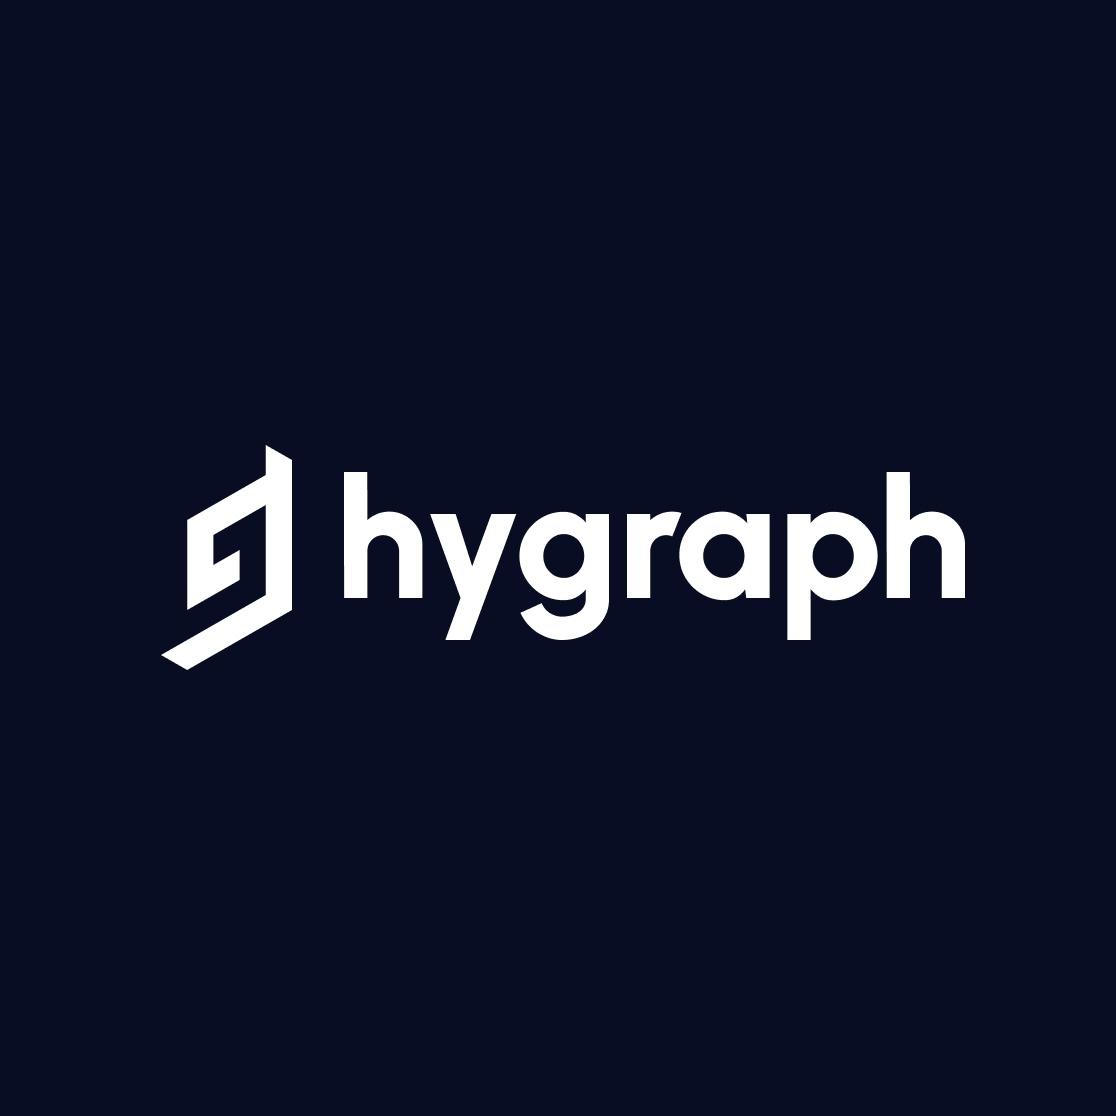 Hygraph App logo